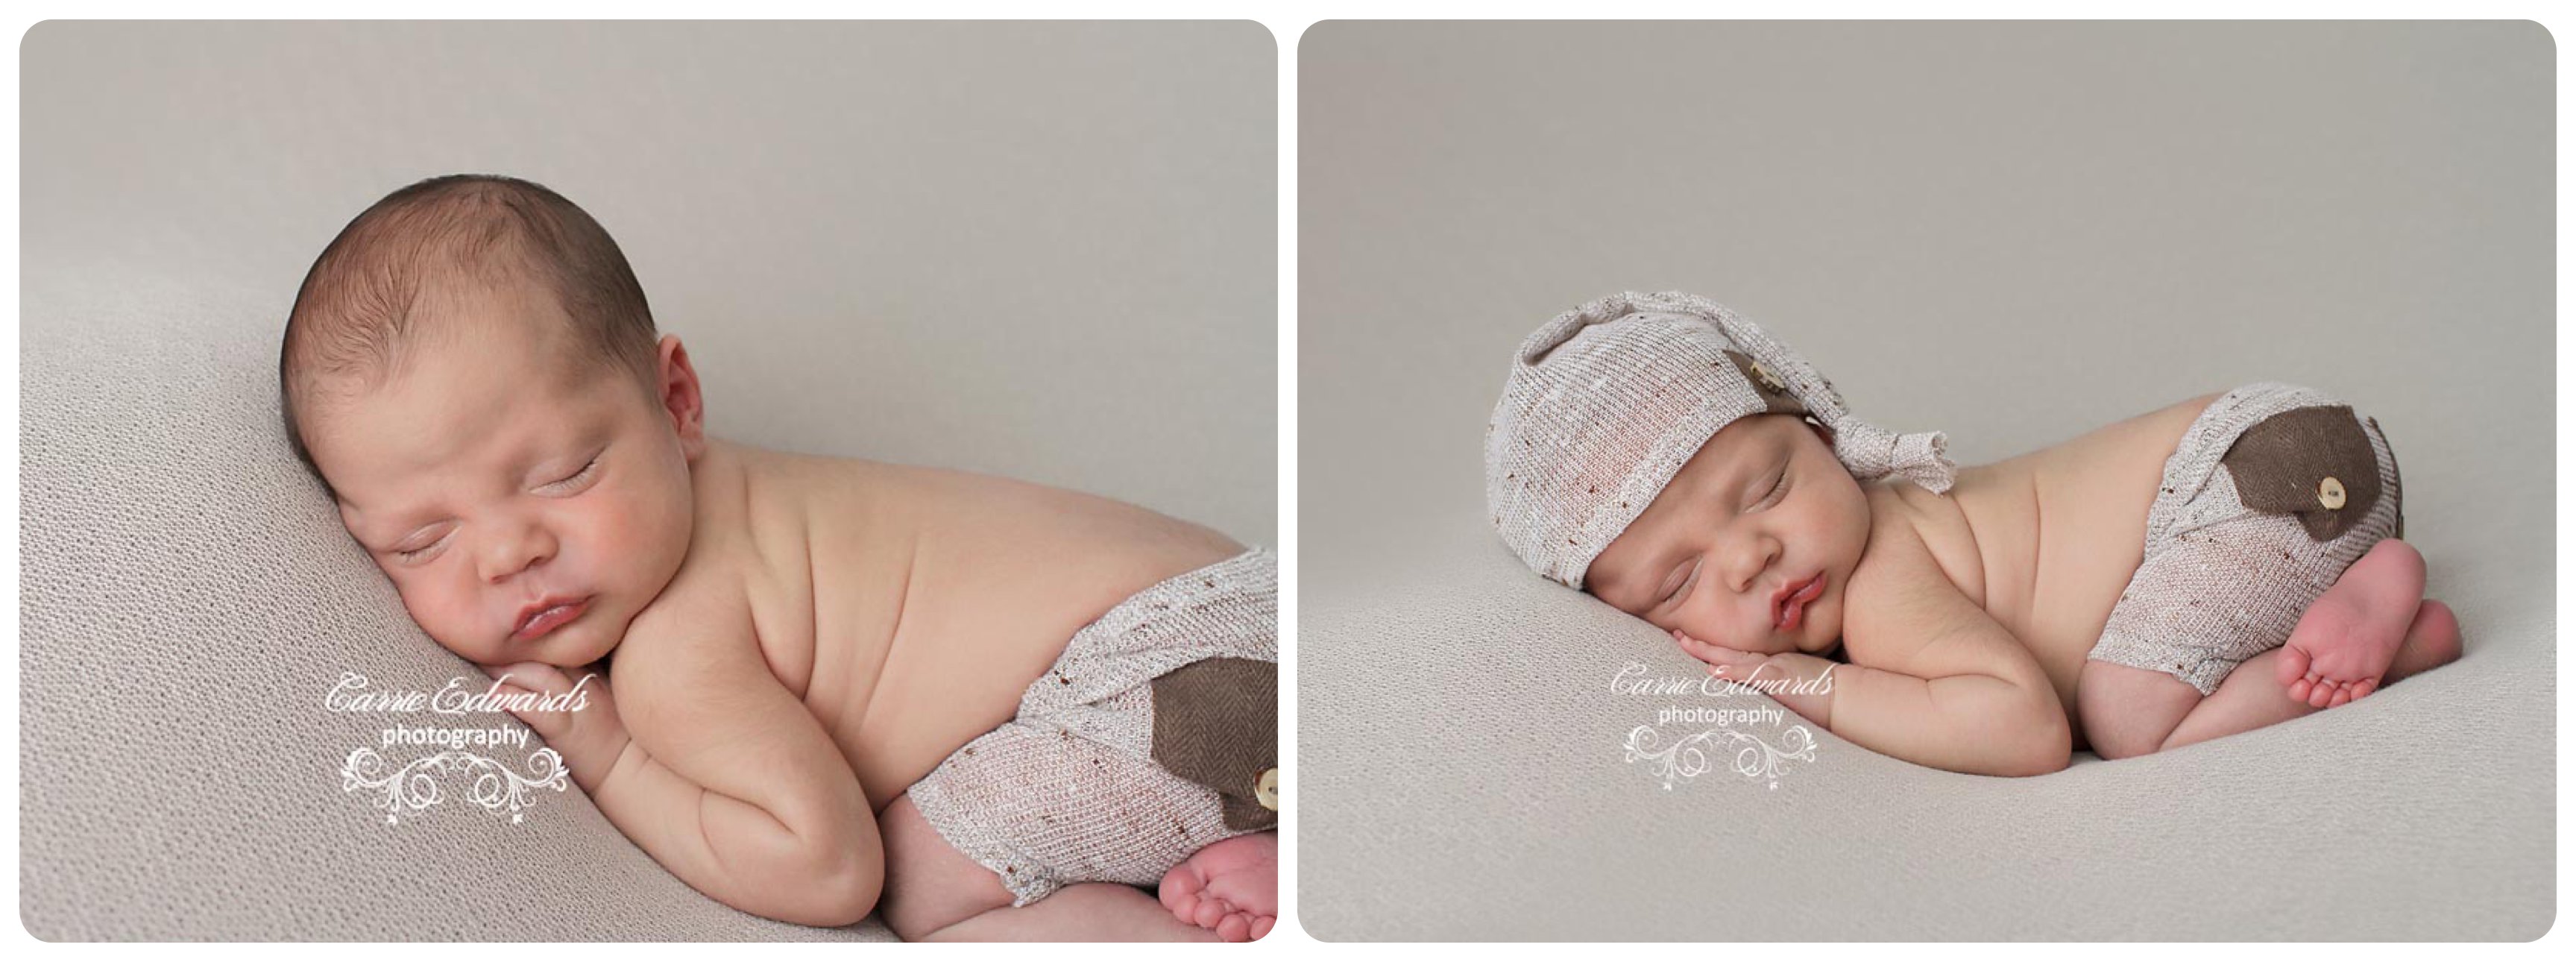 evergreen-newborn-photographer-baby-pictures-infant-infant-pictures-newborn-pictures-baby-photos-newborn-photographer